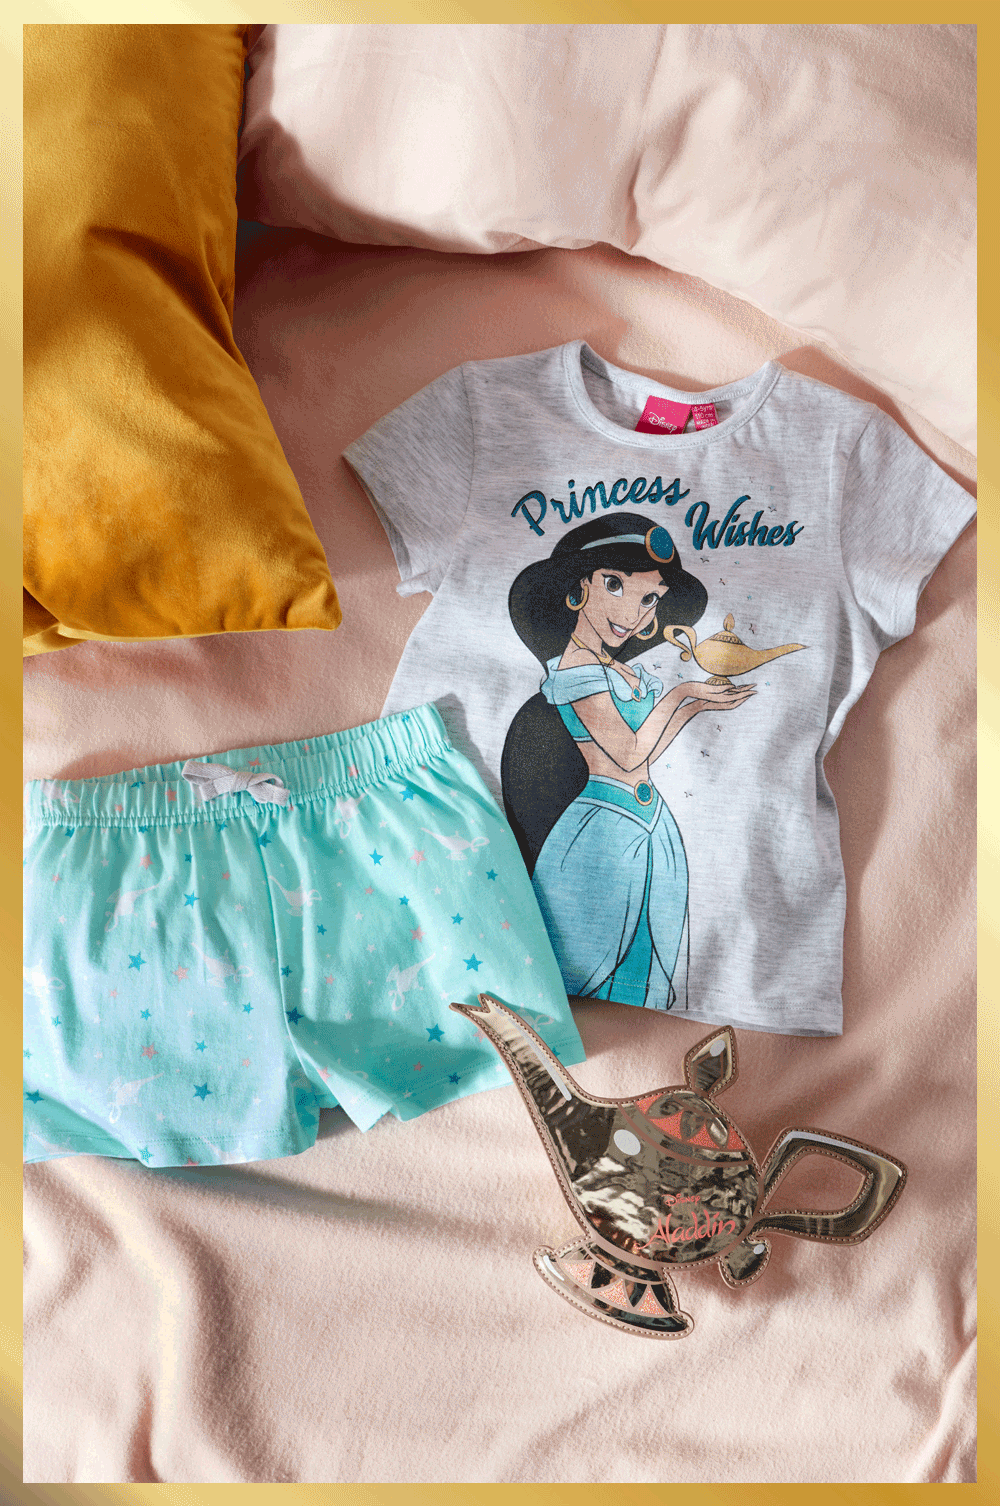 Damas Niñas Princesa vida Pijamas Con Licencia Disney Camiseta Leggings Primark BNWT